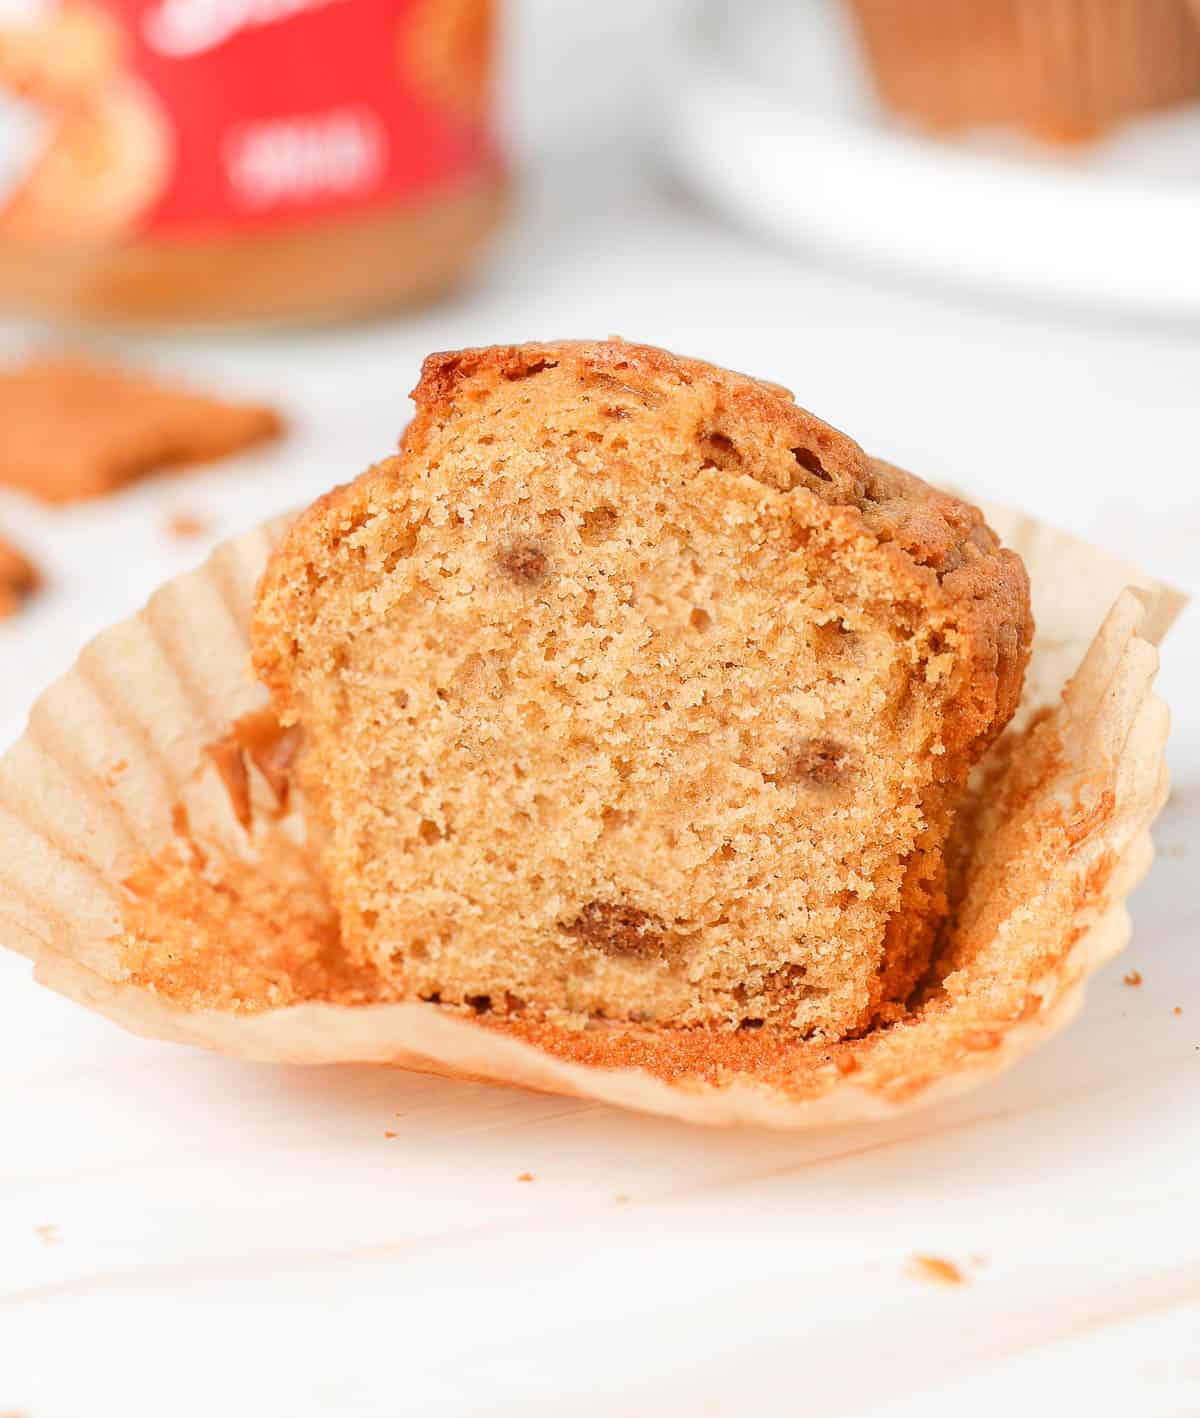 Muffin sliced in haf in its wrapper (Crumb Shot).